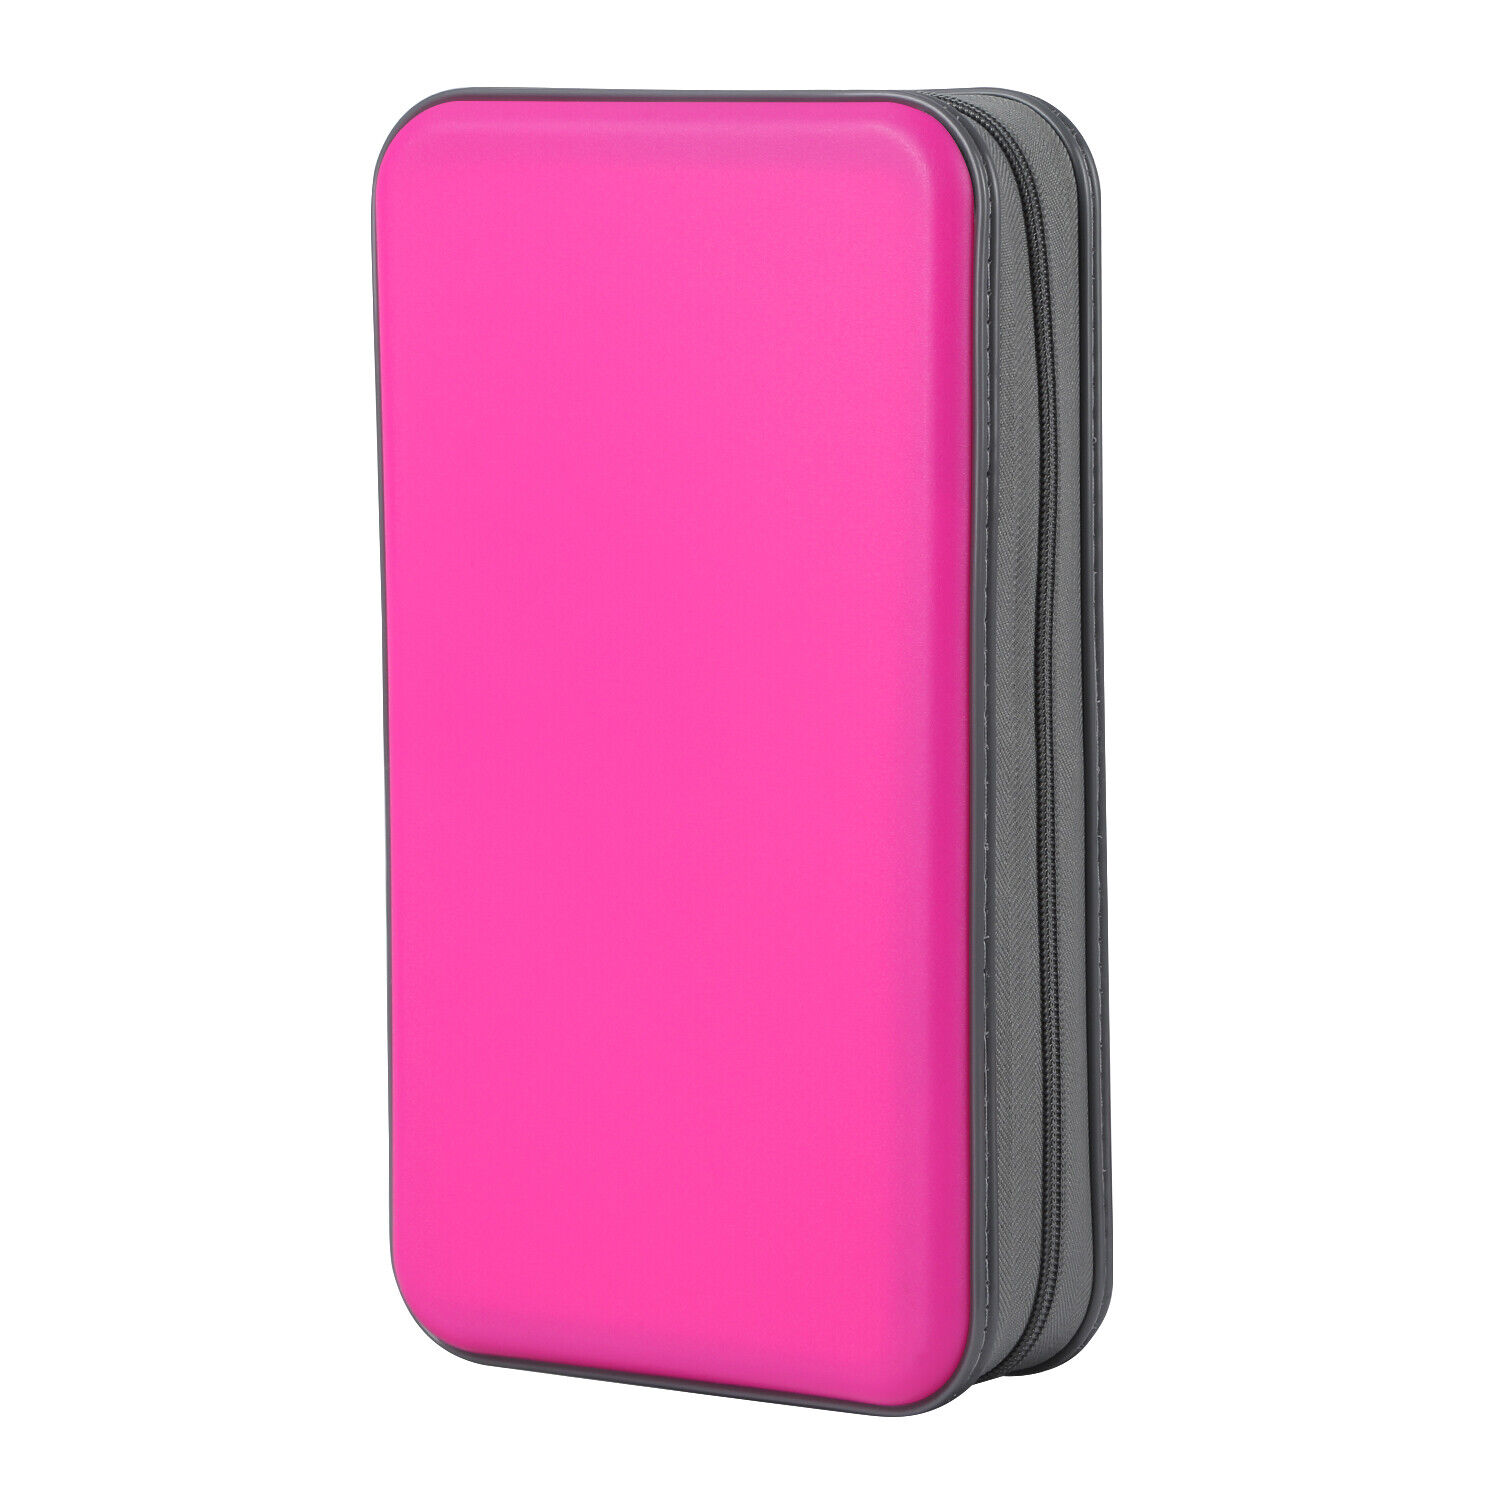 96 Disc CD Case DVD VCD Carry Holder Portable Storage Wallet Organizer Bag Pink